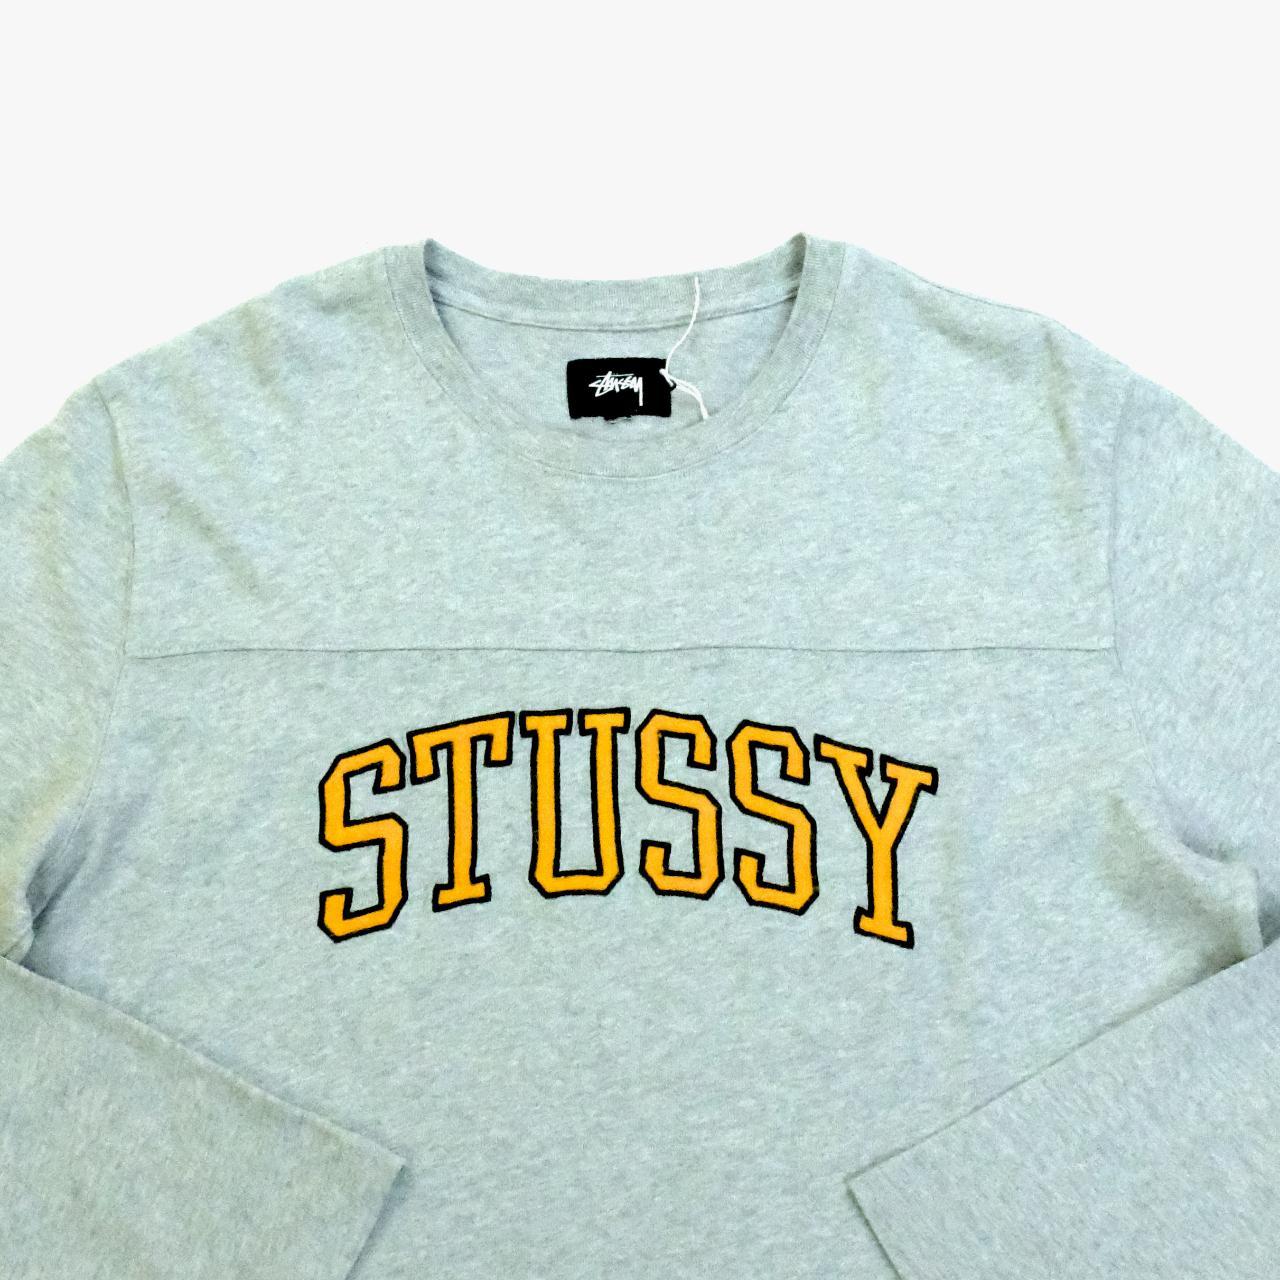 Stussy Top